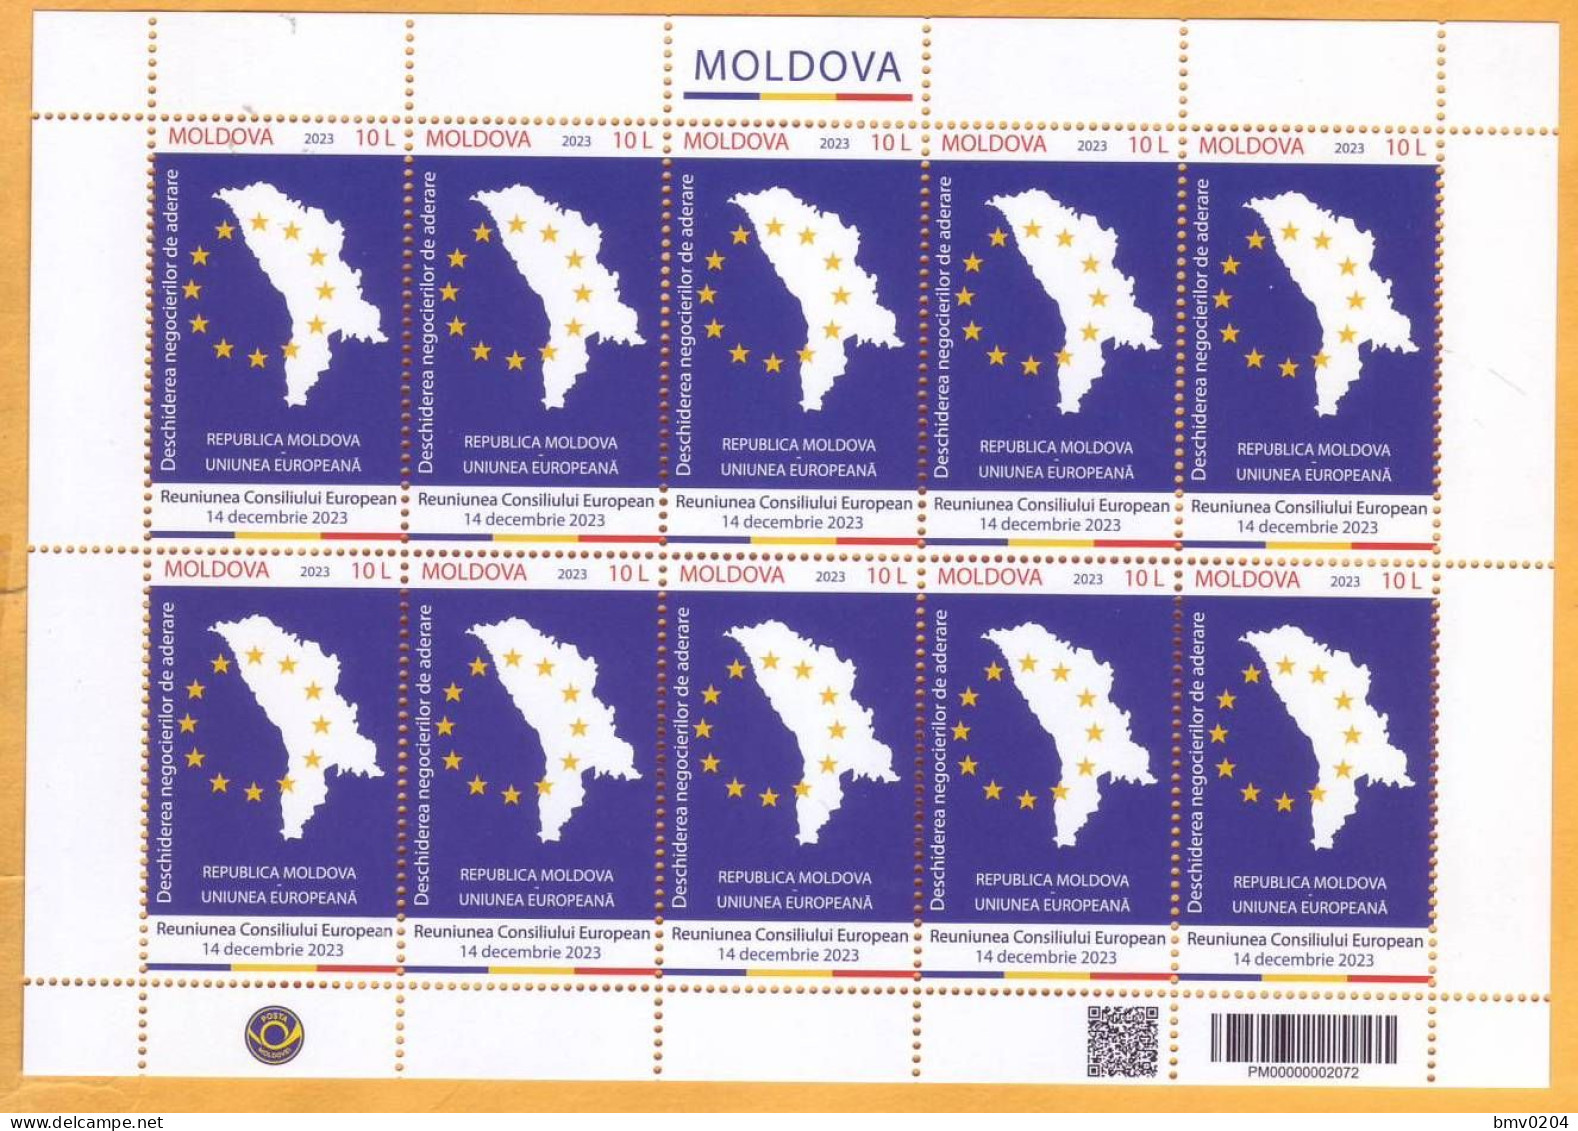 2023  Moldova  Sheet The Opening Of Accession Negotiations REPUBLIC OF MOLDOVA - EUROPEAN UNION  Mint - Moldawien (Moldau)